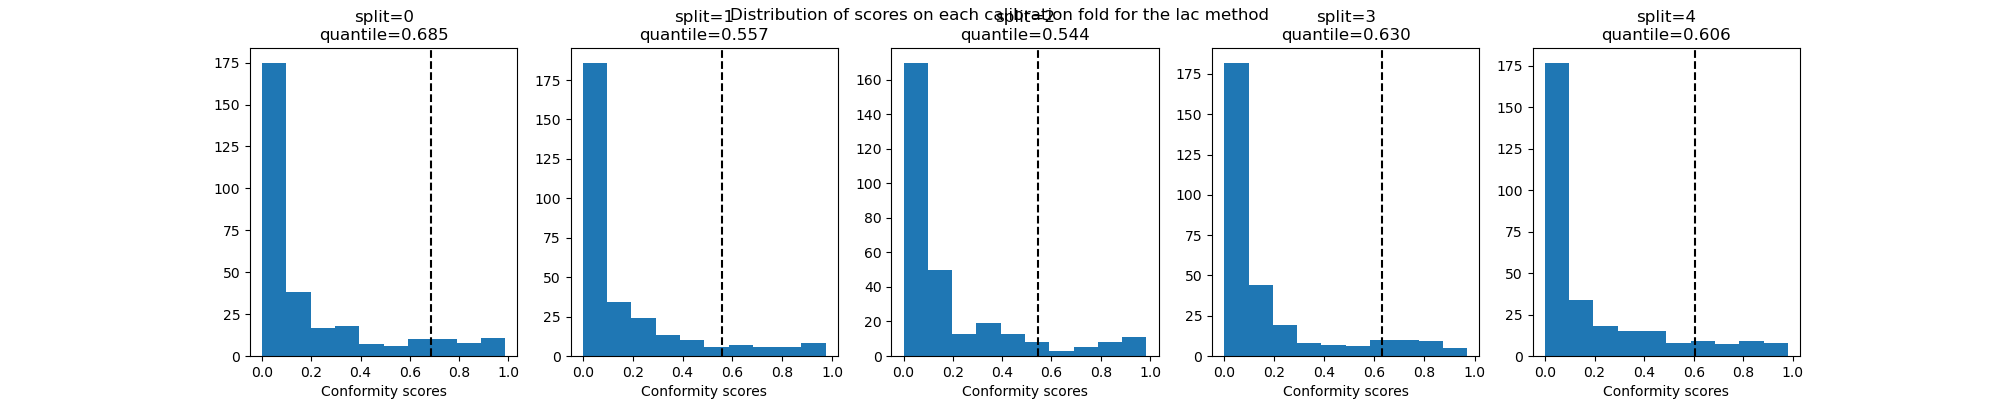 Distribution of scores on each calibration fold for the lac method, split=0 quantile=0.685, split=1 quantile=0.557, split=2 quantile=0.544, split=3 quantile=0.630, split=4 quantile=0.606